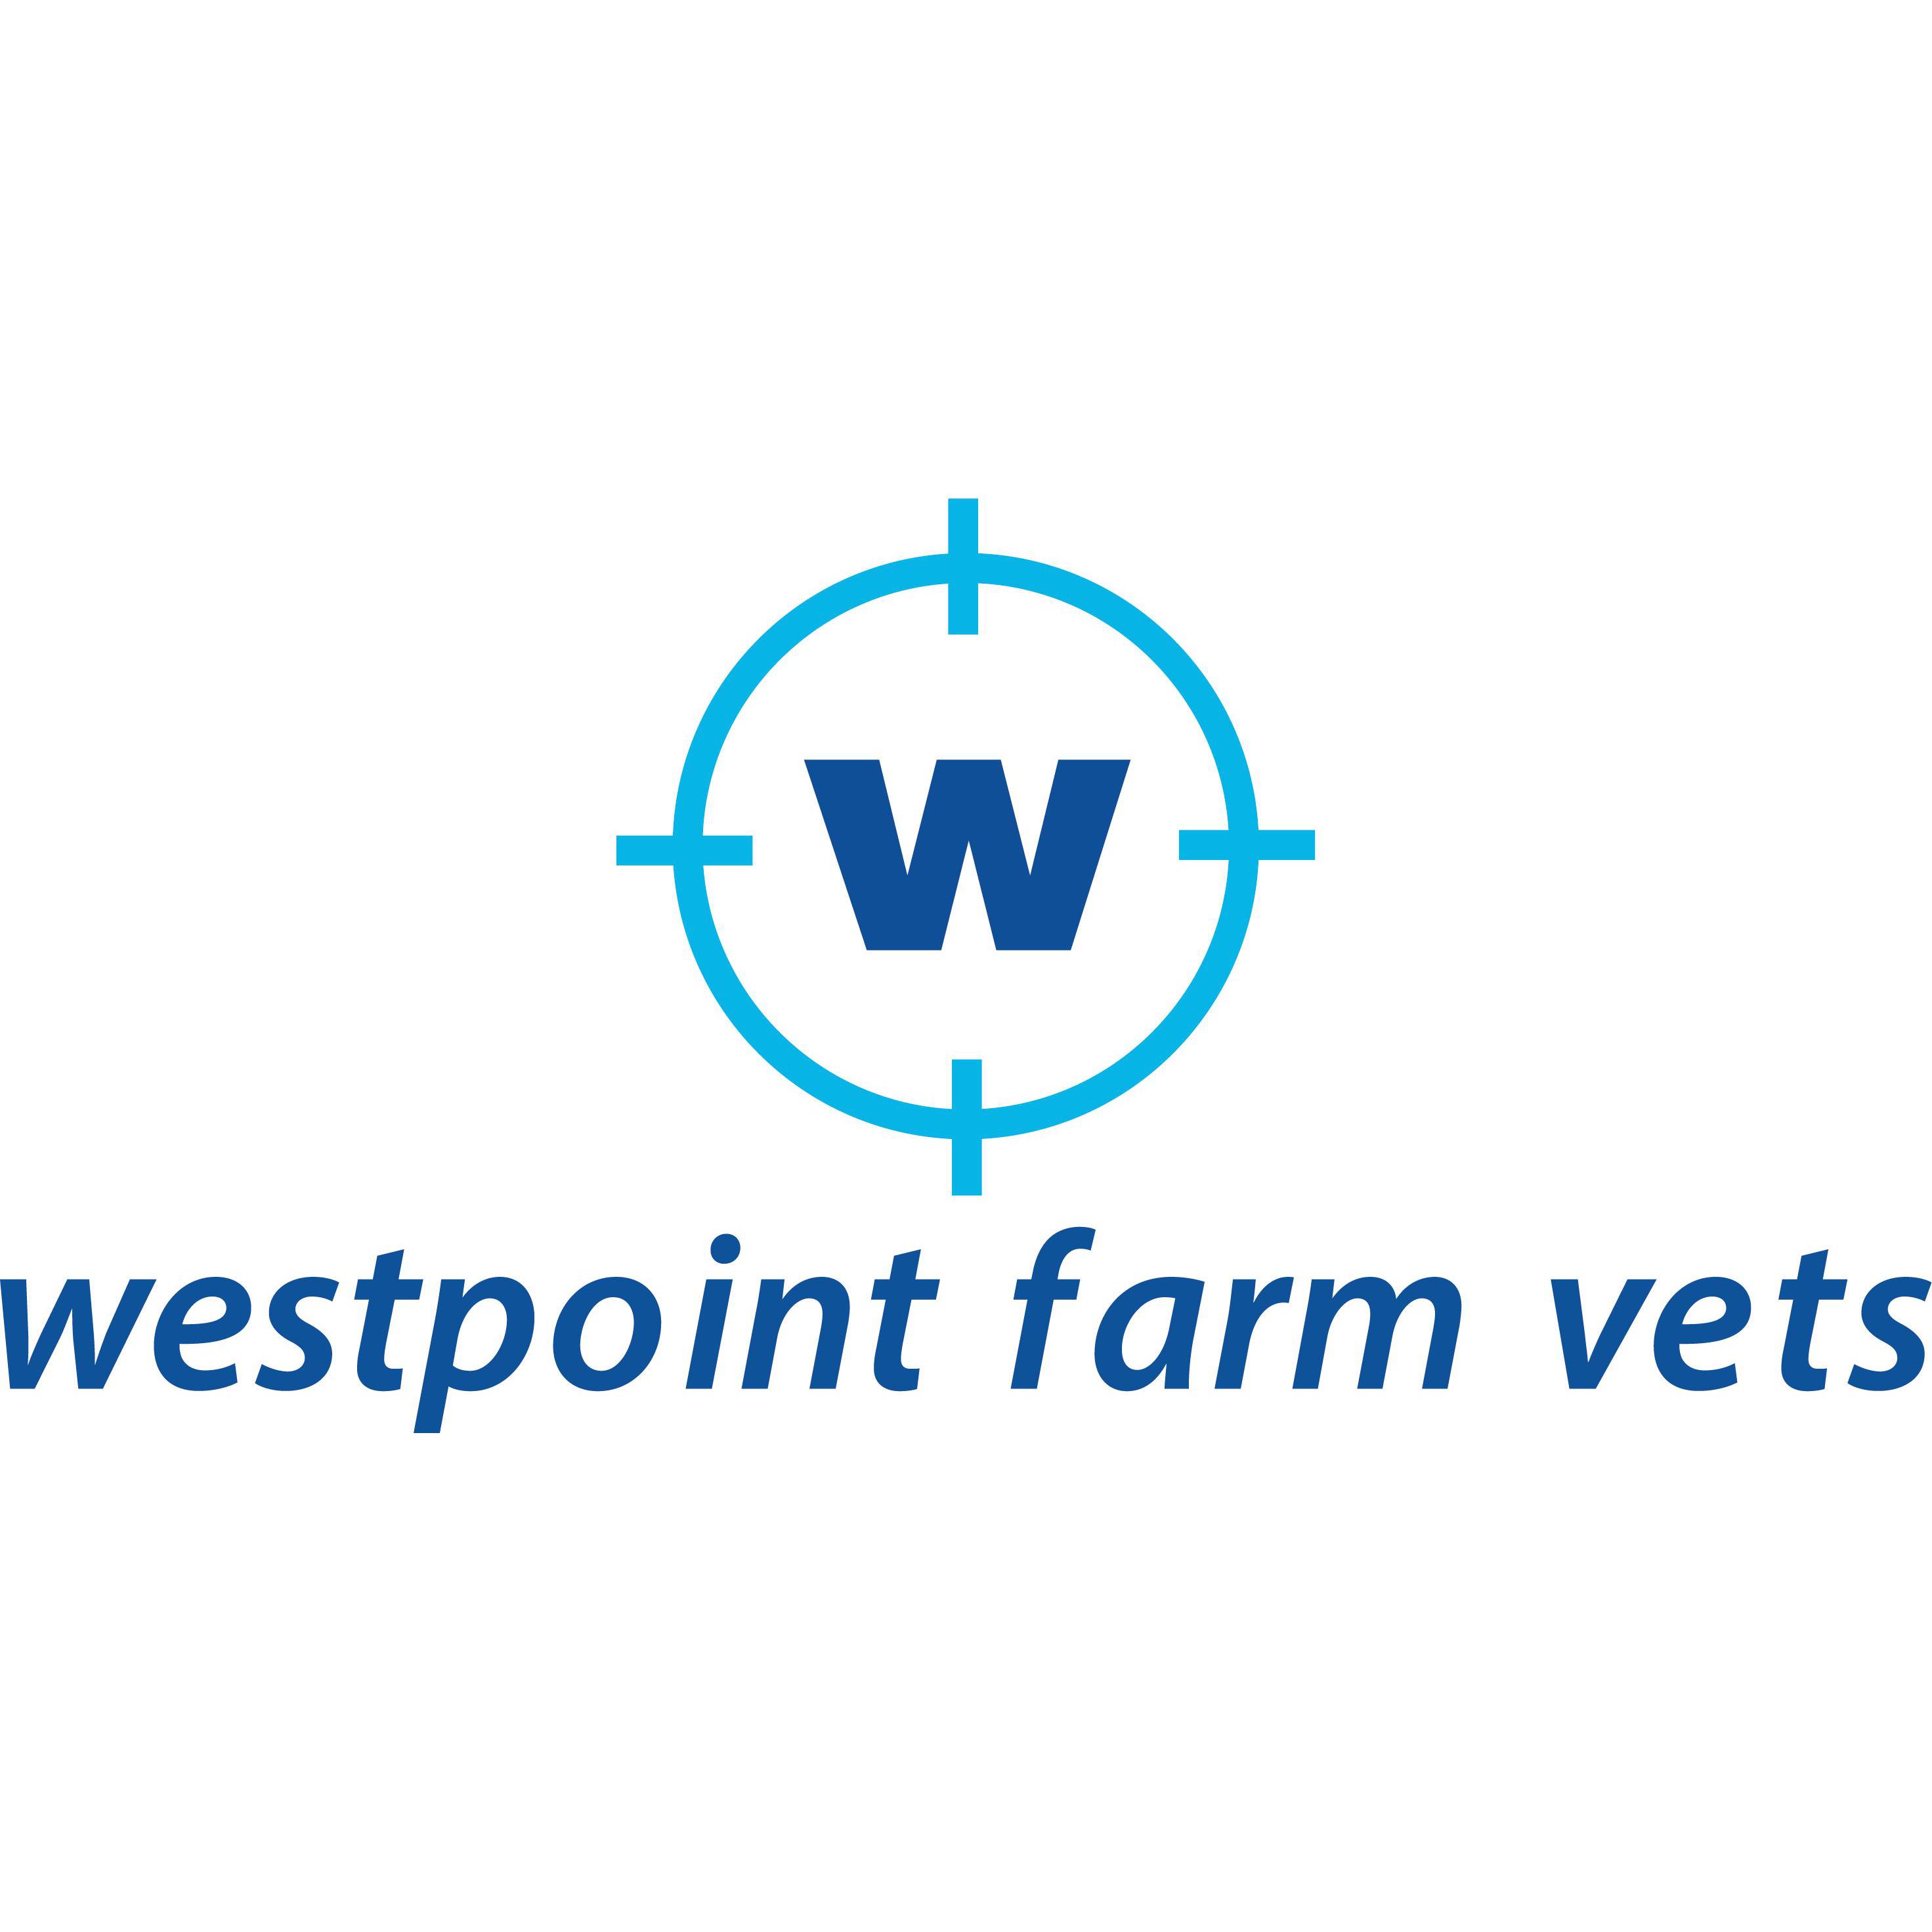 Westpoint Farm Vets, Chelmsford - Chelmsford, Essex CM1 7TG - 01306 628489 | ShowMeLocal.com